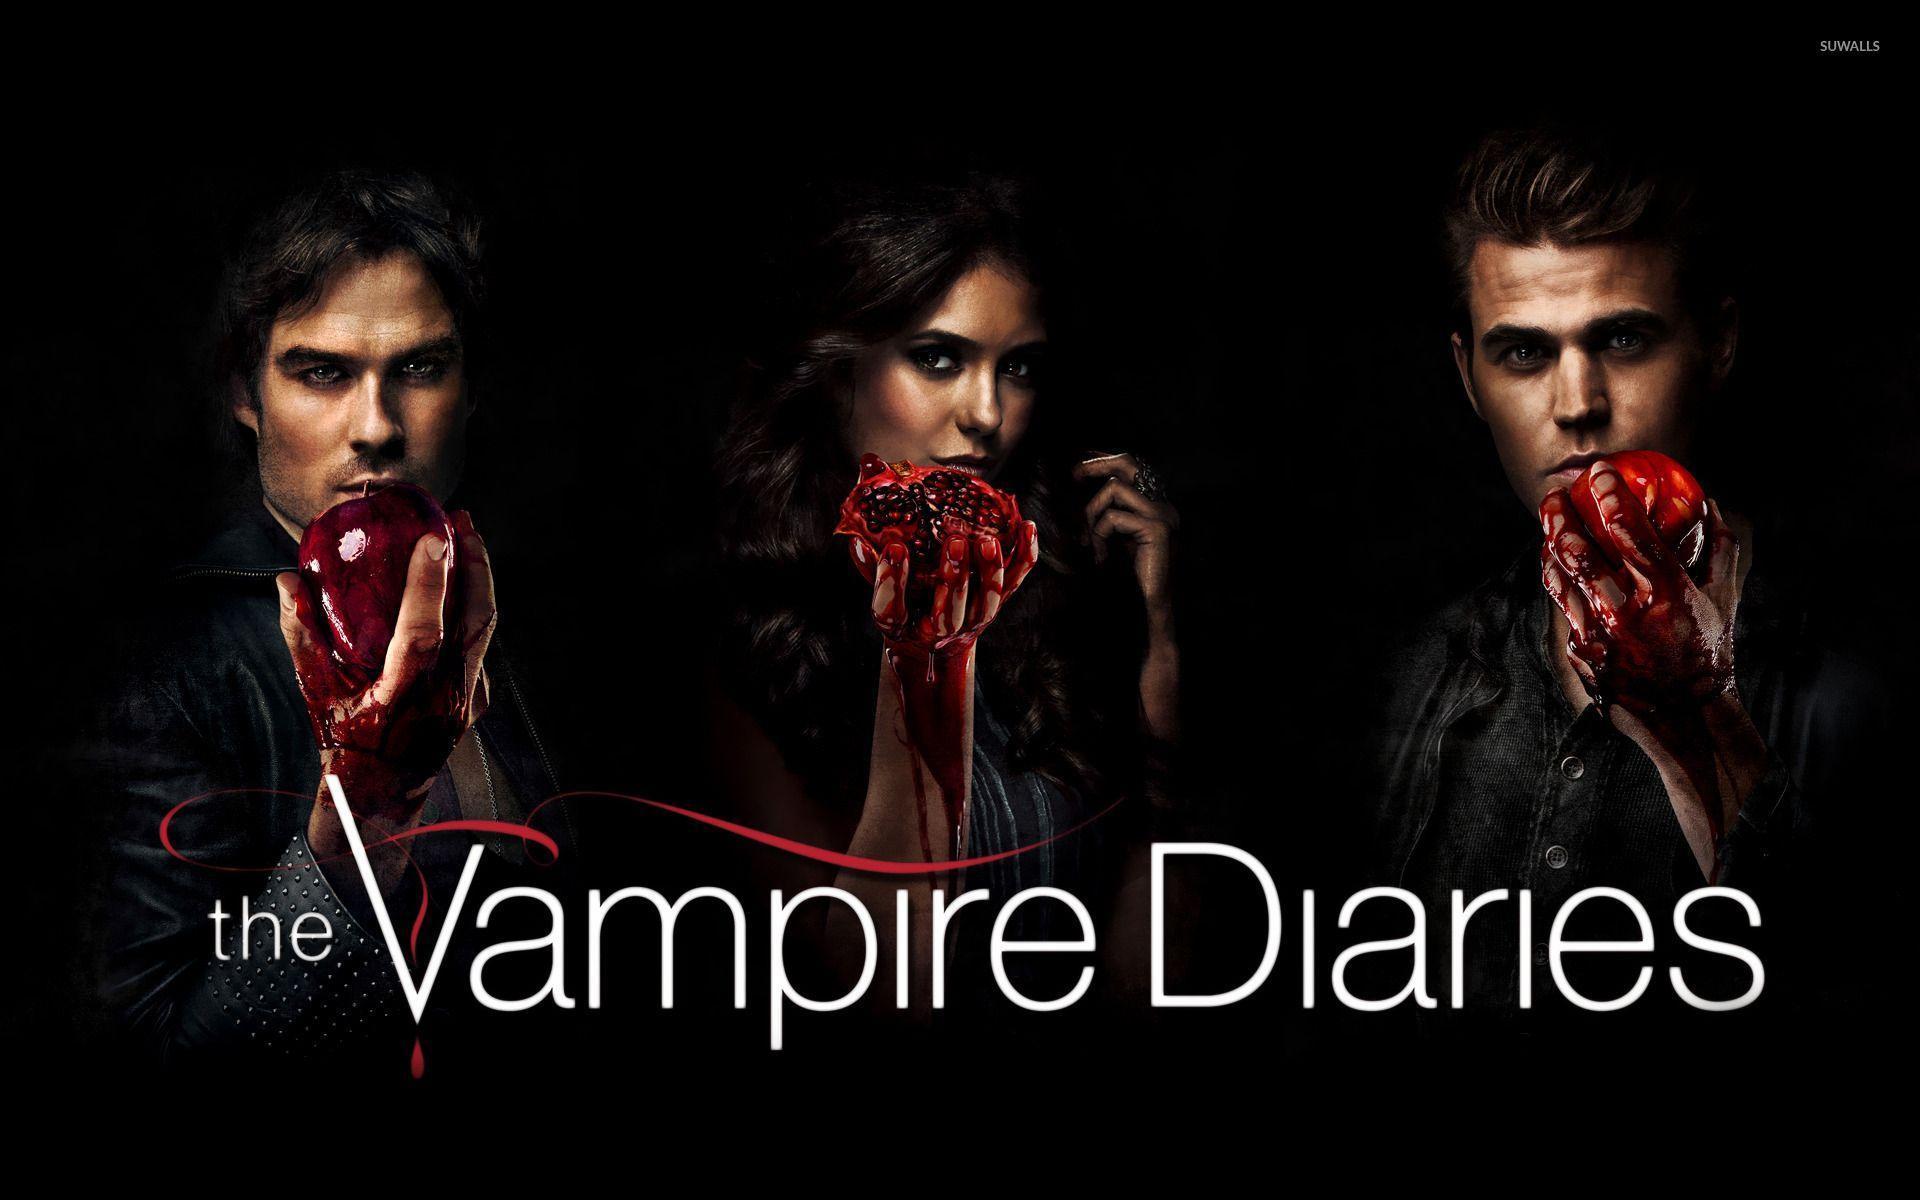 The Vampire Diaries [9] wallpaper Show wallpaper